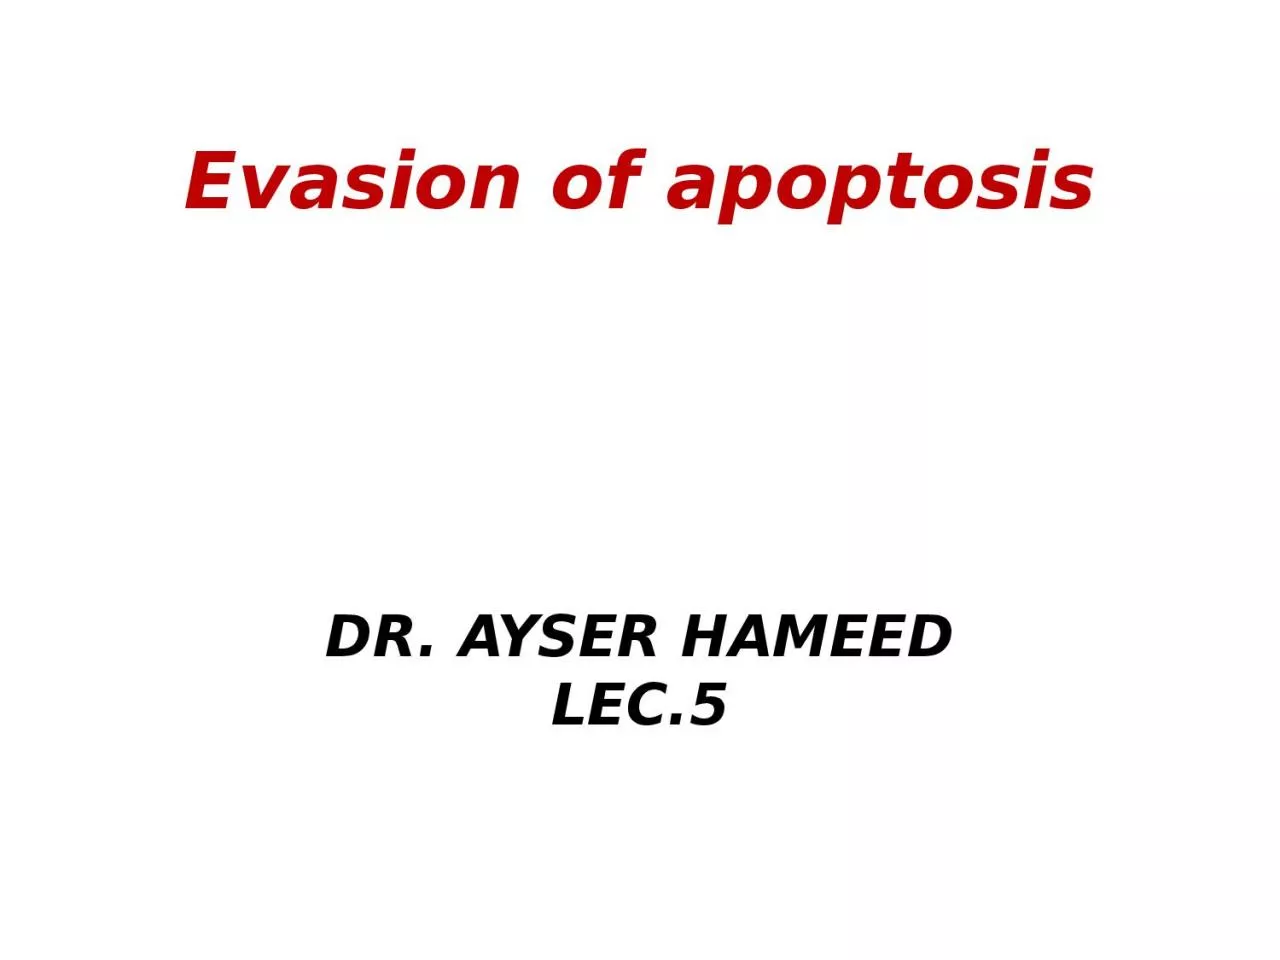 Evasion of apoptosis DR. AYSER HAMEED